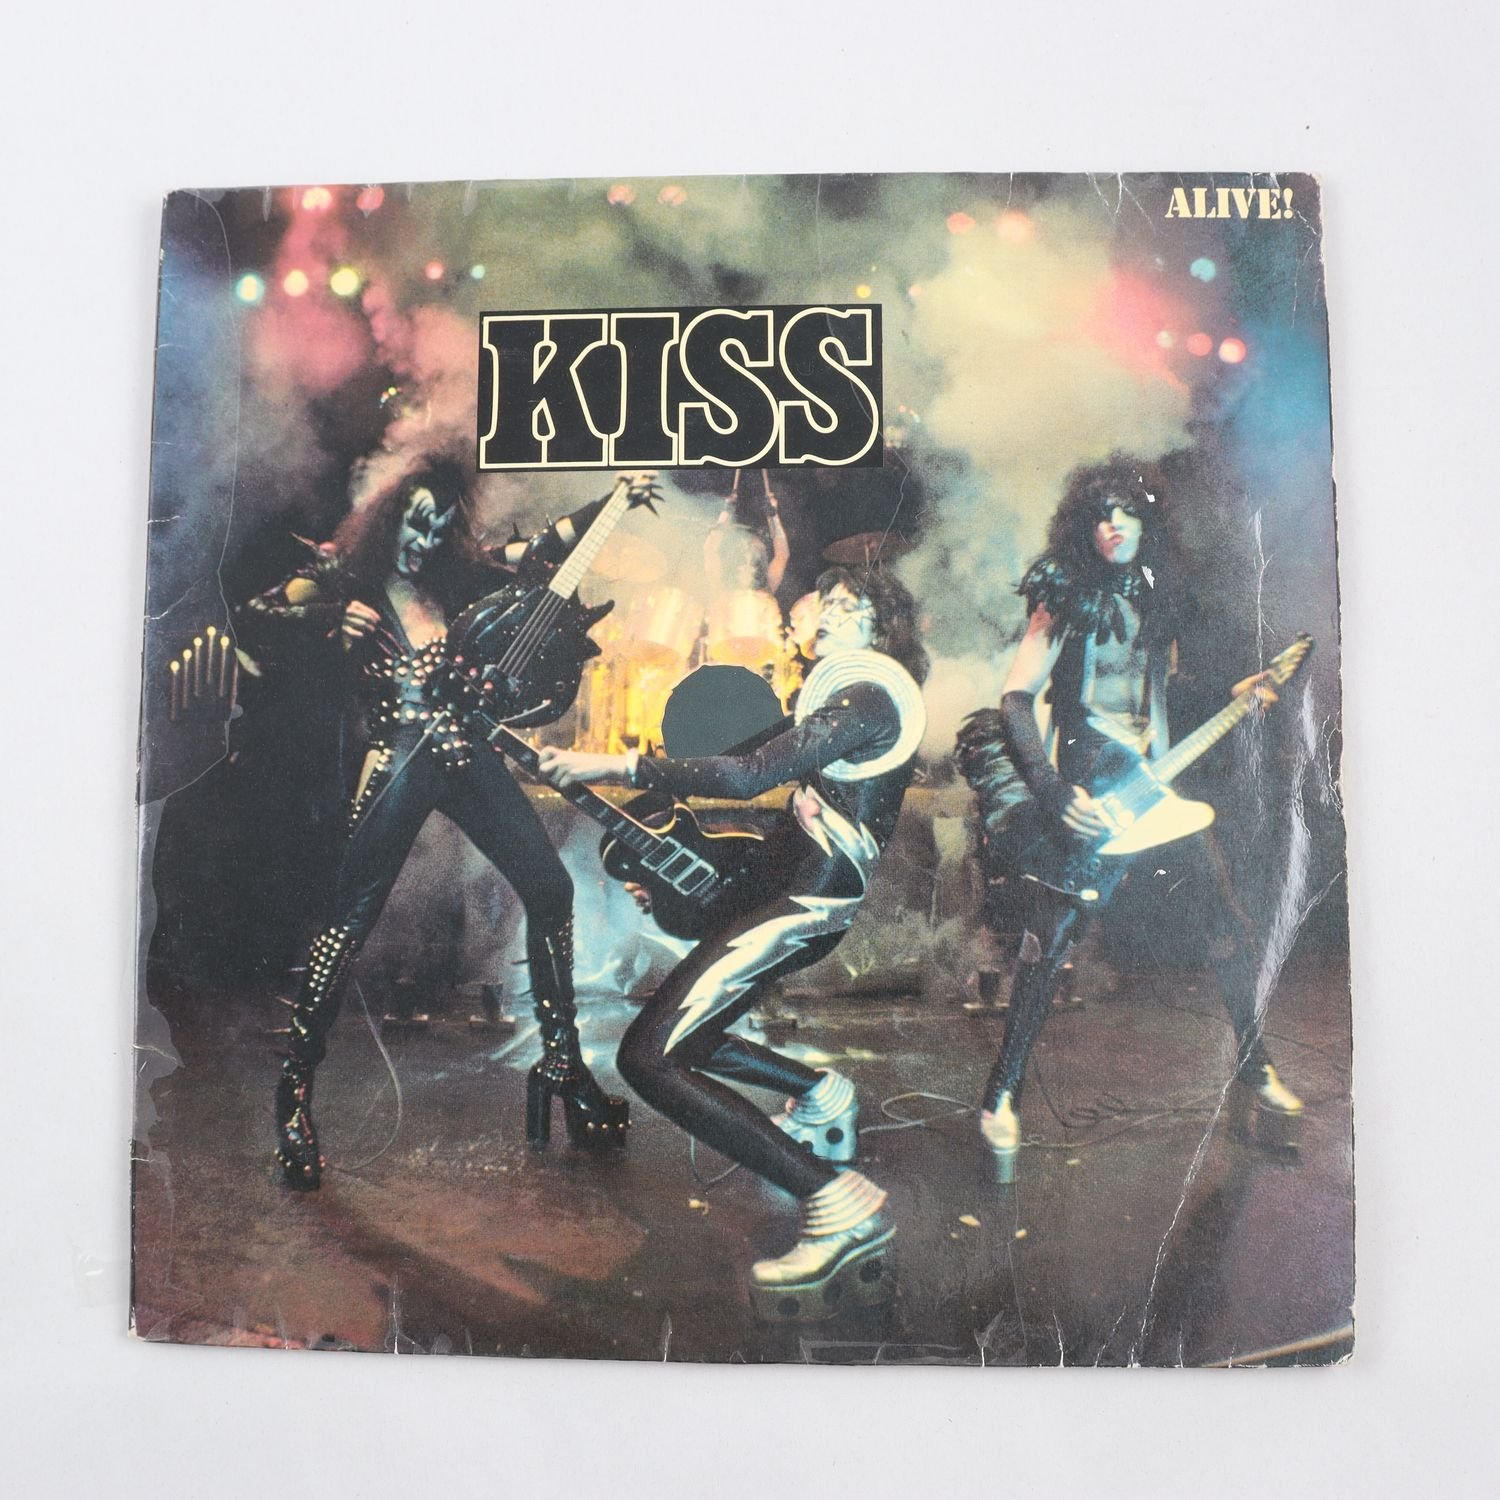 LP Kiss, Alive!